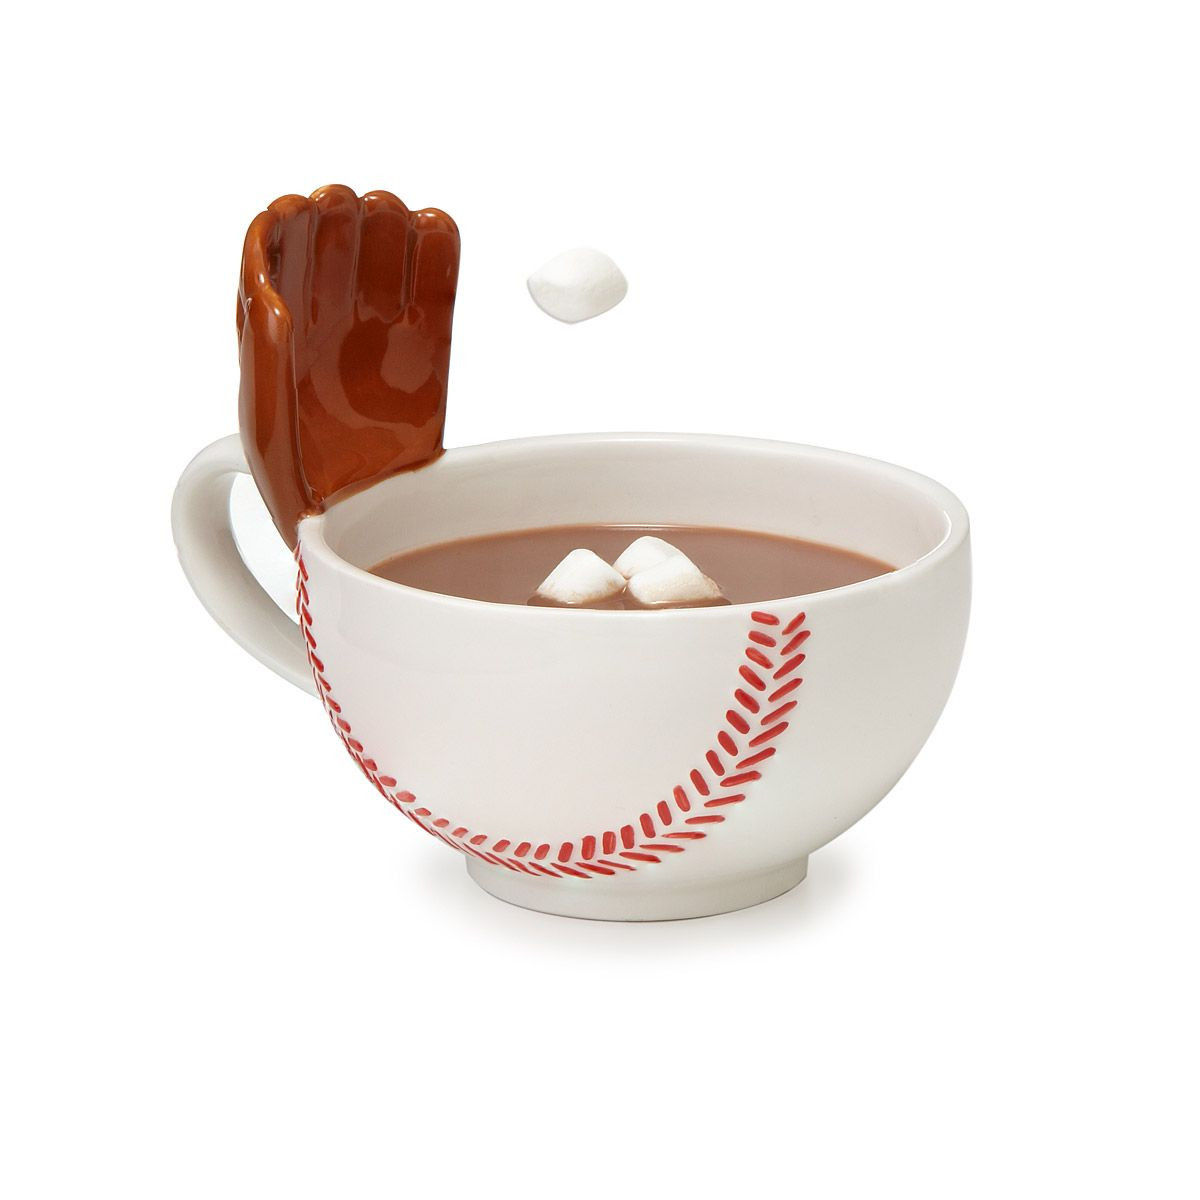 Baseball Gifts For Kids
 The Mug with a Glove baseball t kids